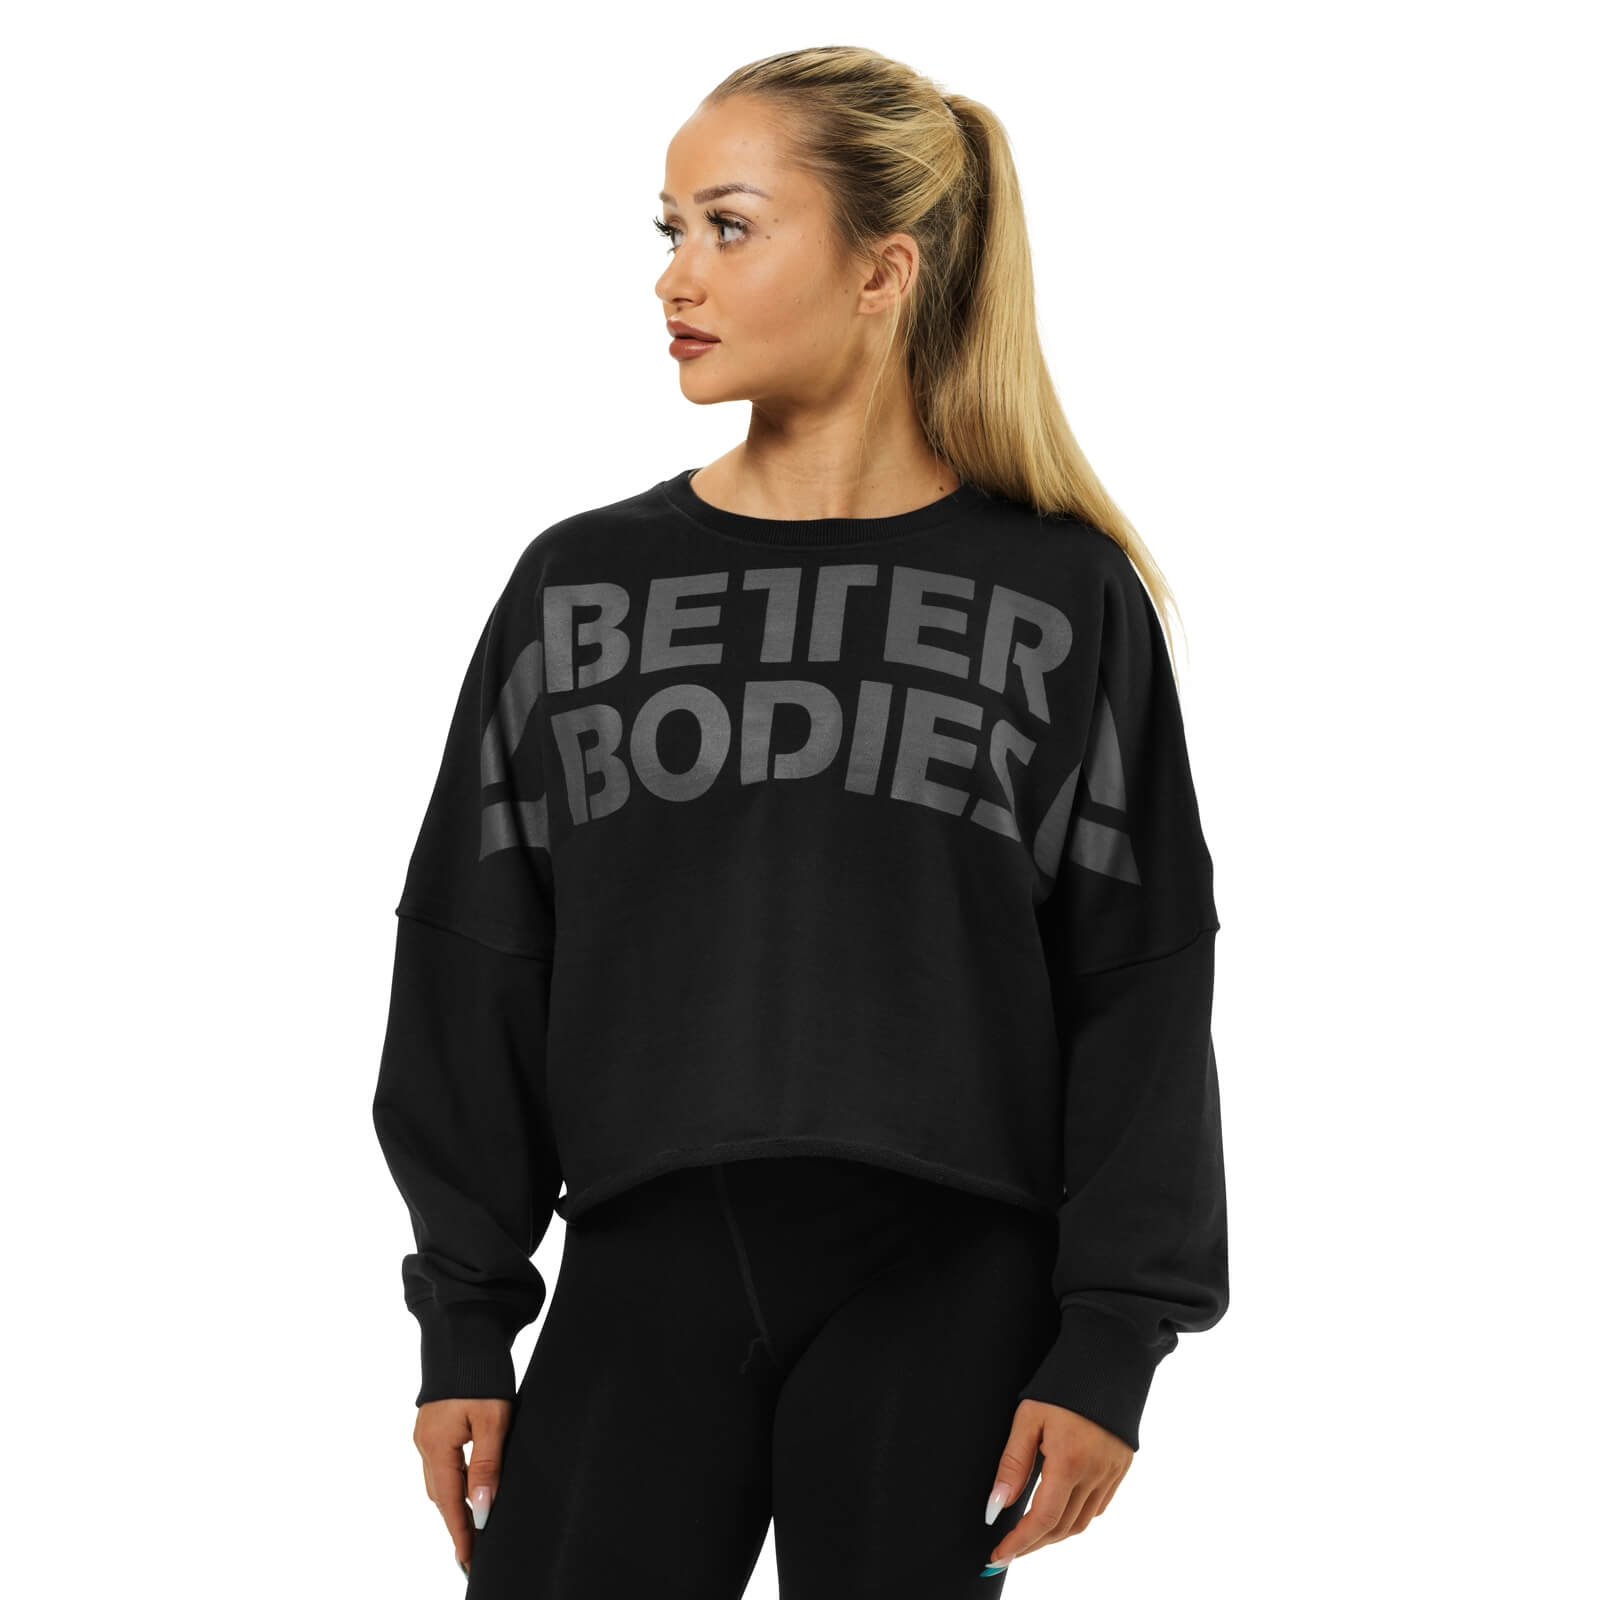 Bowery Raw Sweater, black, Better Bodies